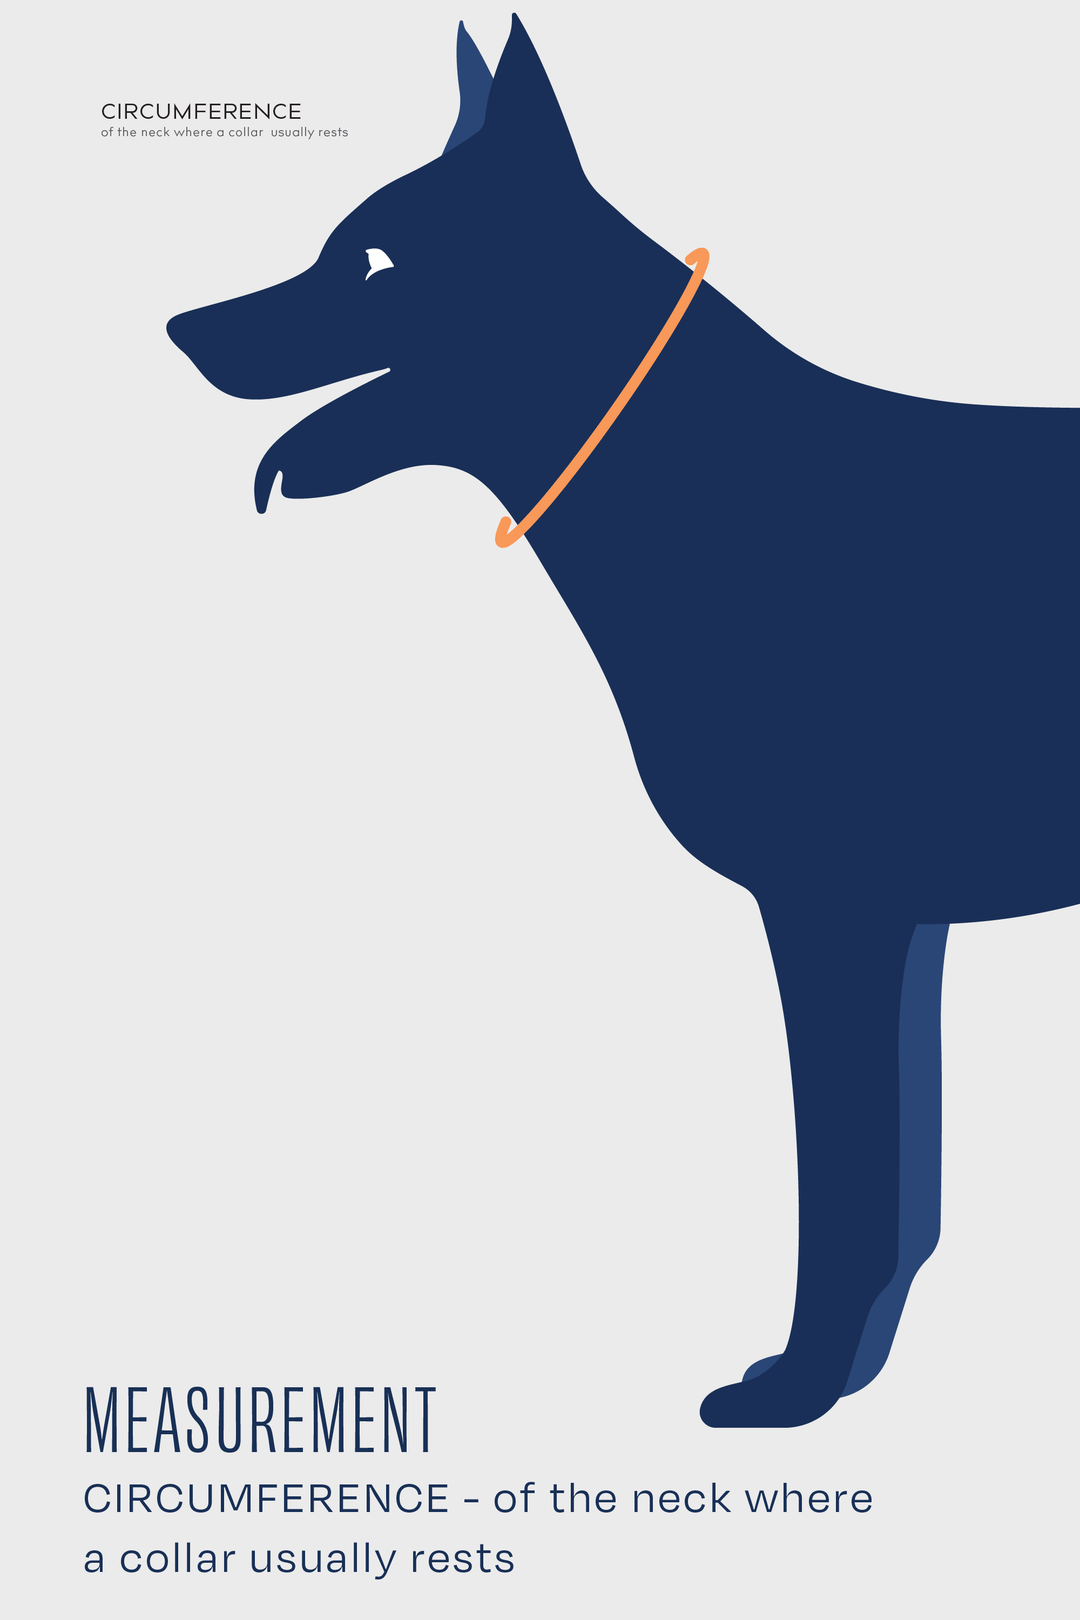 balto uk neck brace for dogs measurement guide